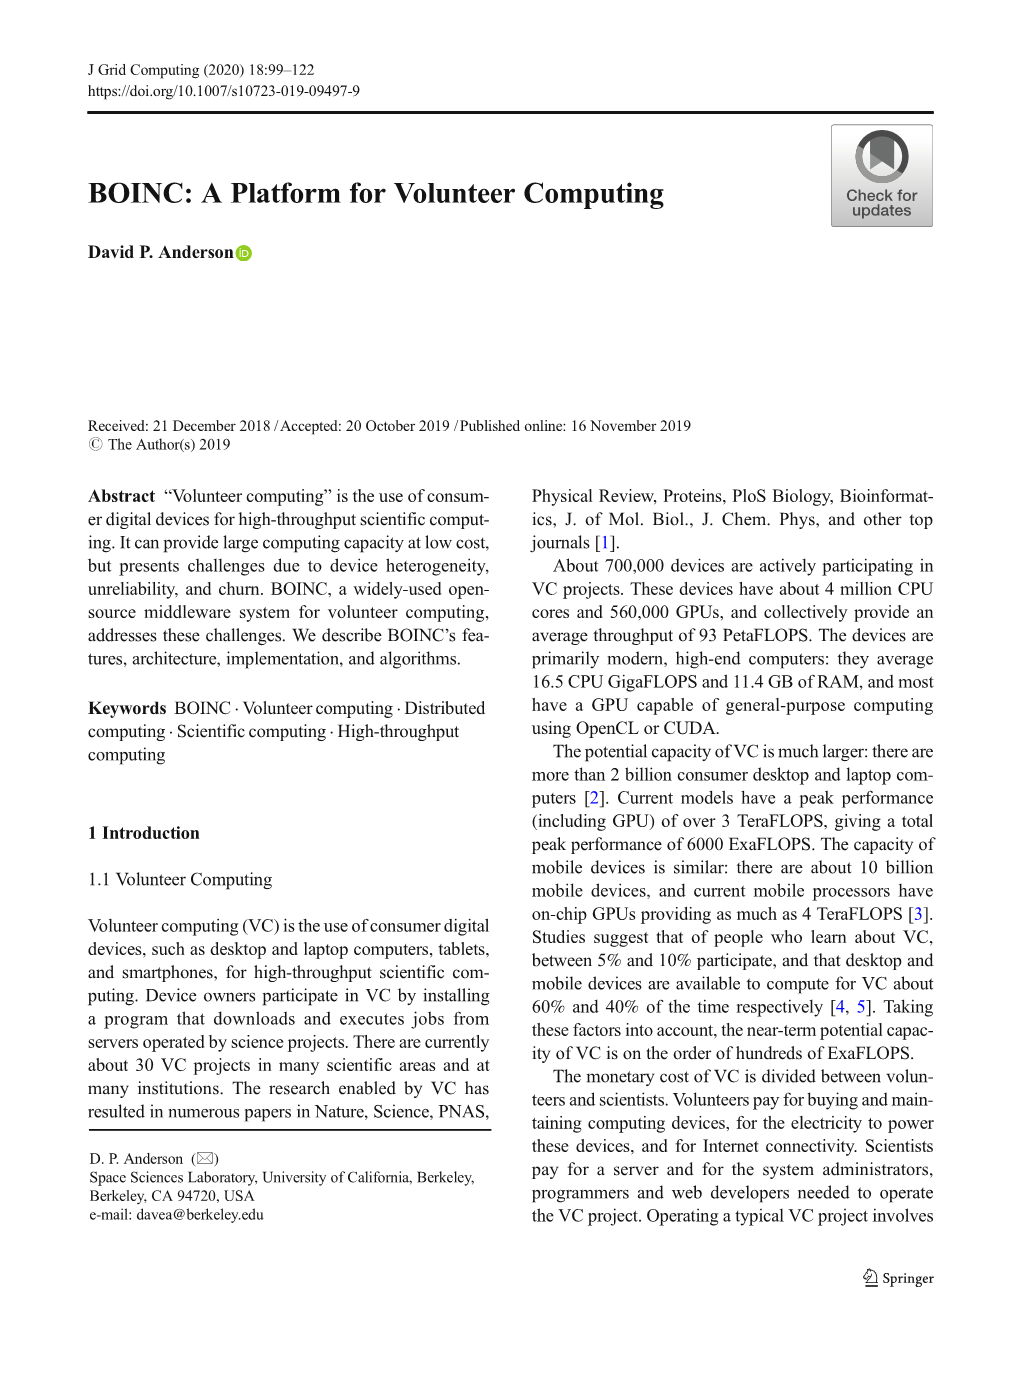 BOINC: a Platform for Volunteer Computing